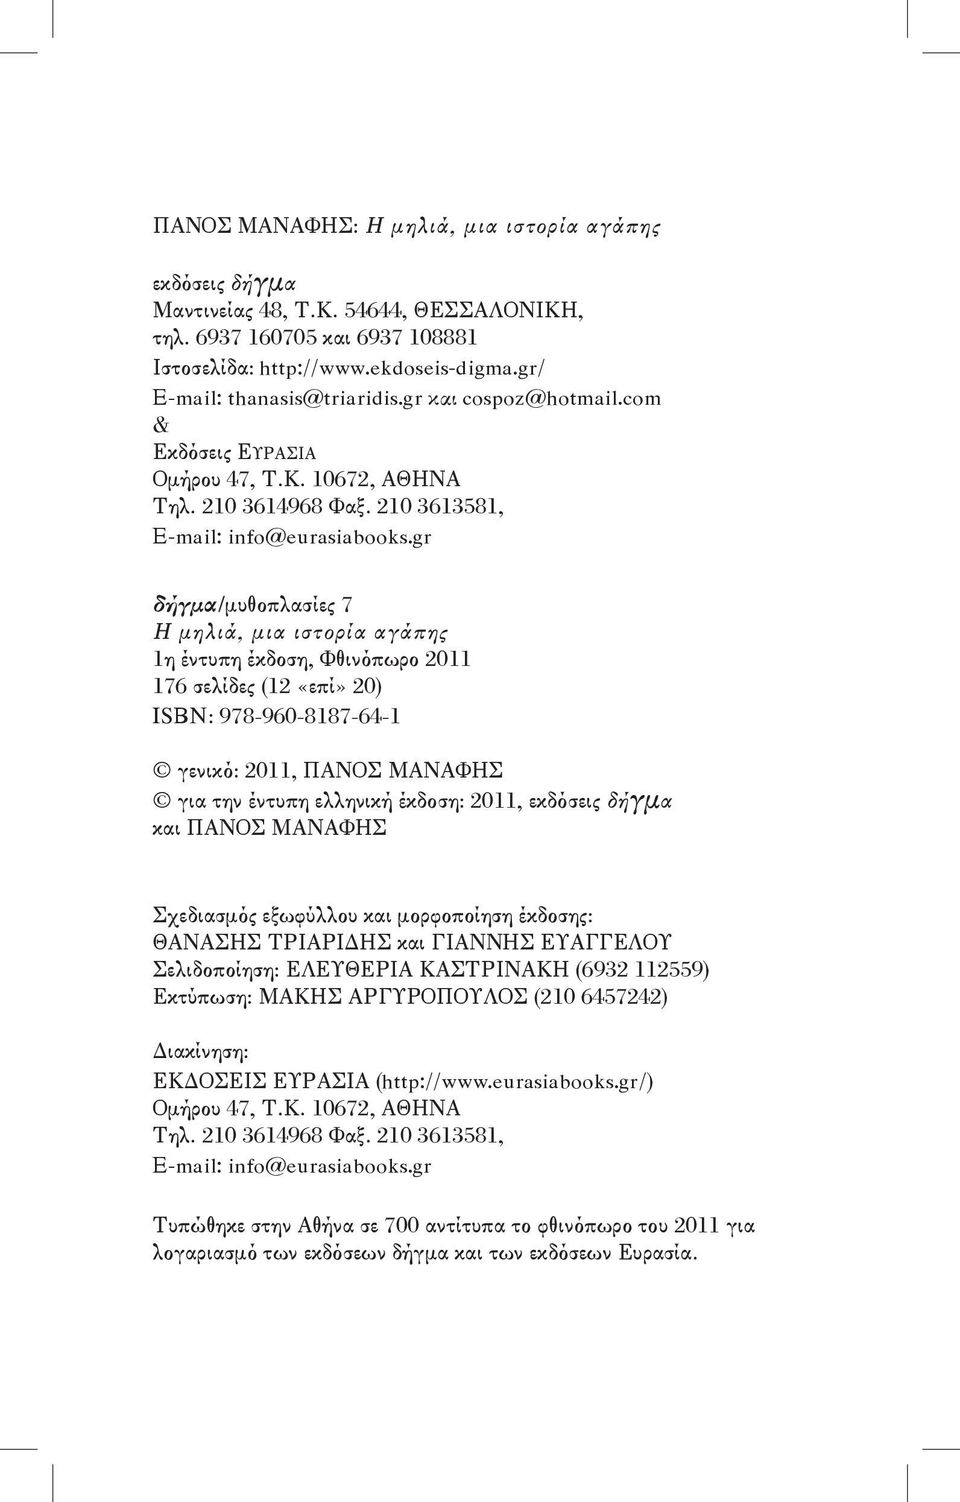 gr δήγμα /μυθοπλασίες 7 Η μηλιά, μια ιστορία αγάπης 1η έντυπη έκδοση, Φθινόπωρο 2011 176 σελίδες (12 «επί» 20) ISBN: 978-960-8187-64-1 γενικό: 2011, ΠΑΝΟΣ ΜΑΝΑΦΗΣ για την έντυπη ελληνική έκδοση: